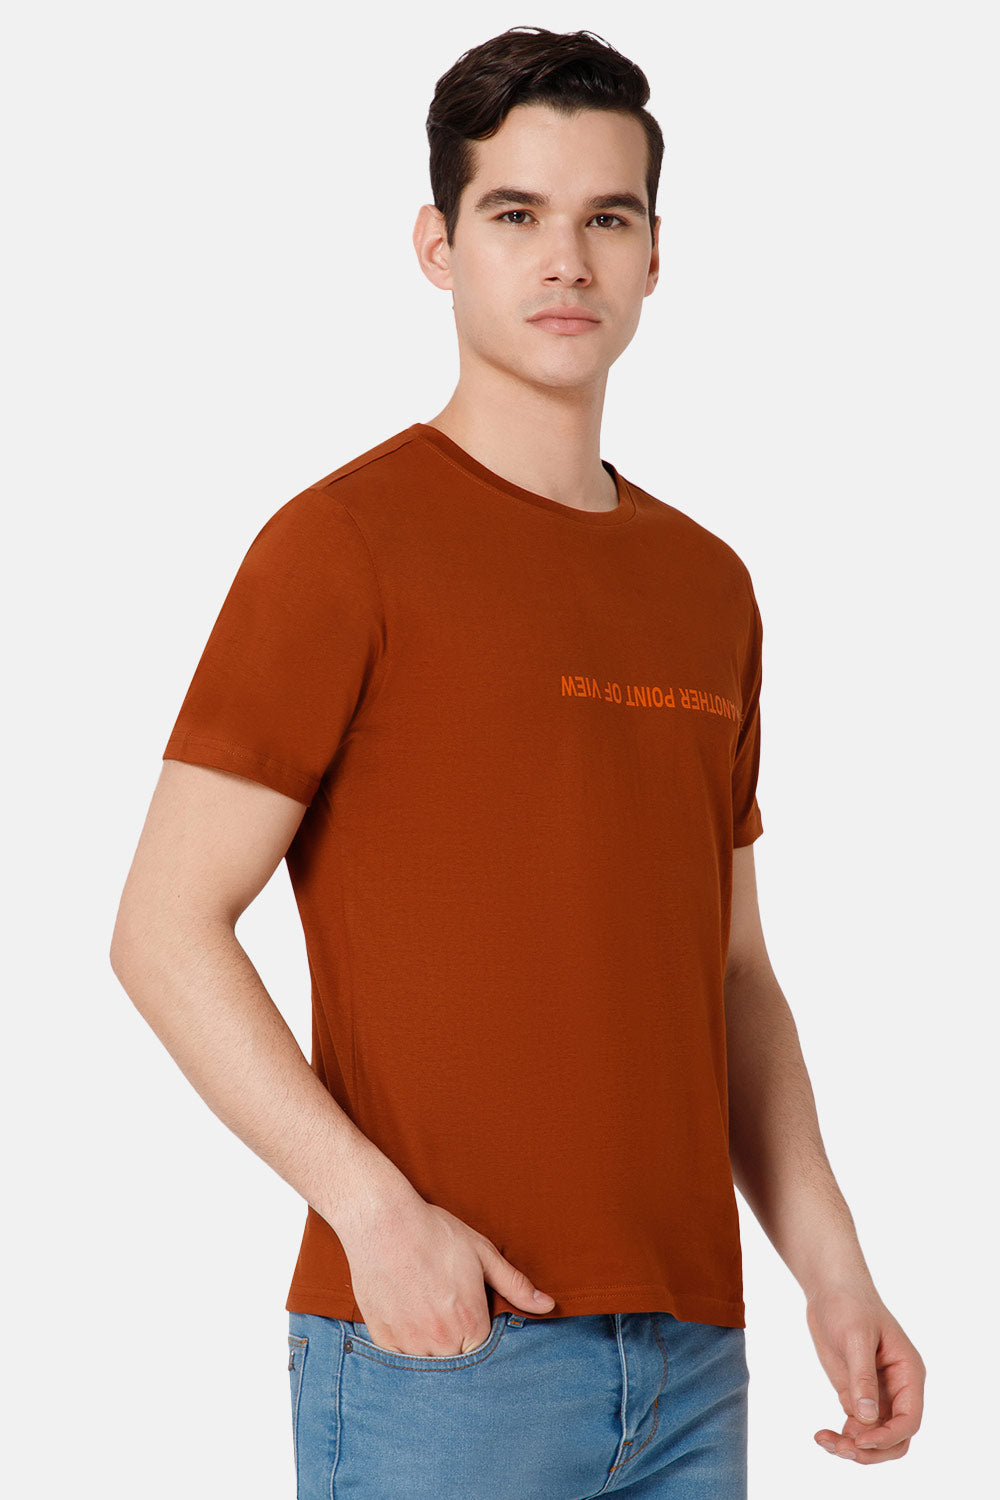 Enhance Printed Crew Neck Men's Casual T-Shirts - Medium Orange - TS26